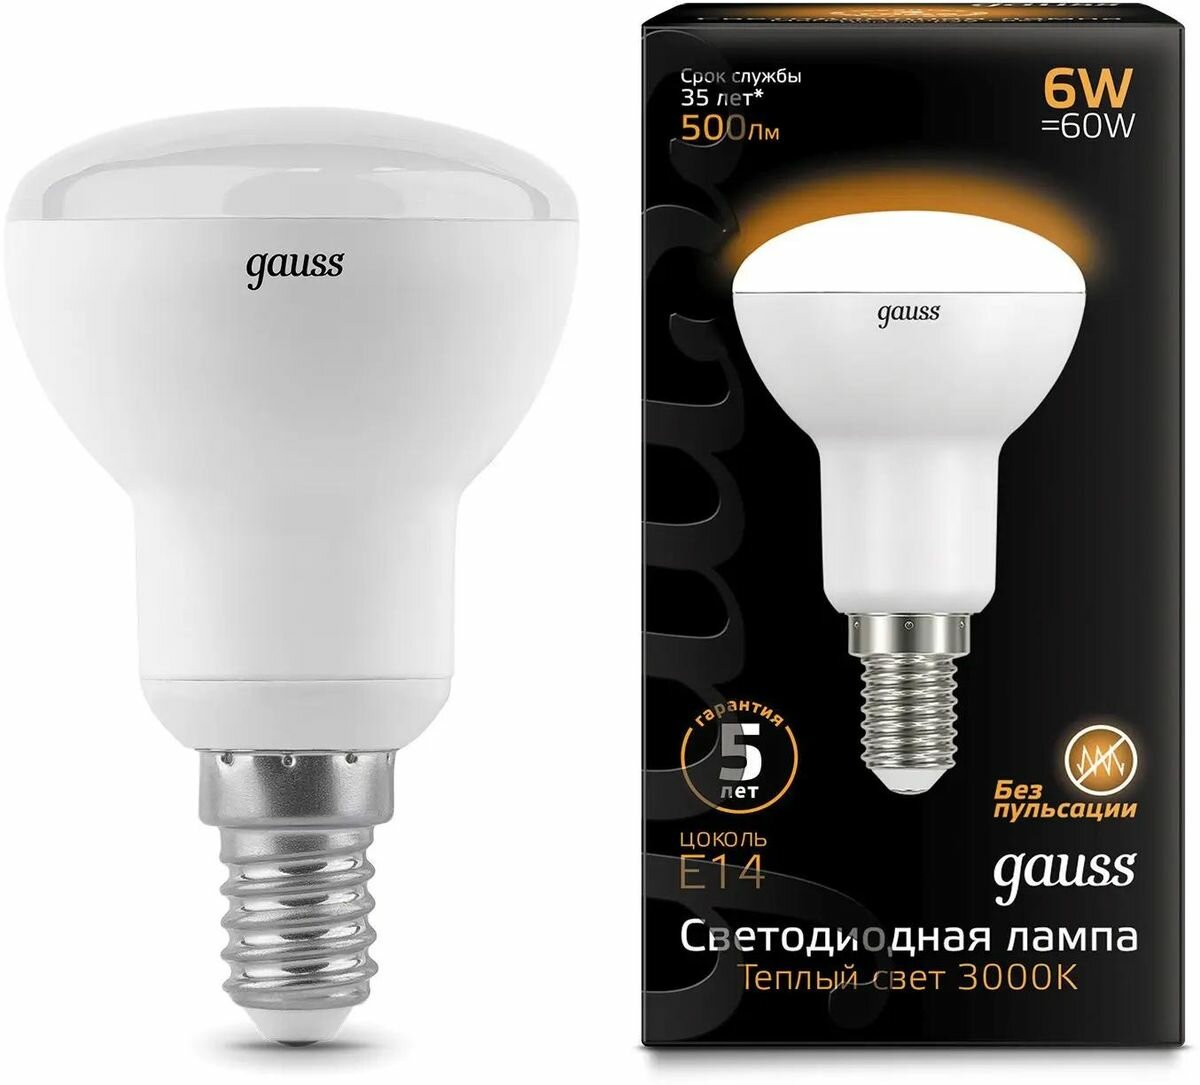 Упаковка ламп LED GAUSS E14, рефлектор, 6Вт, R50, 10 шт. [106001106]